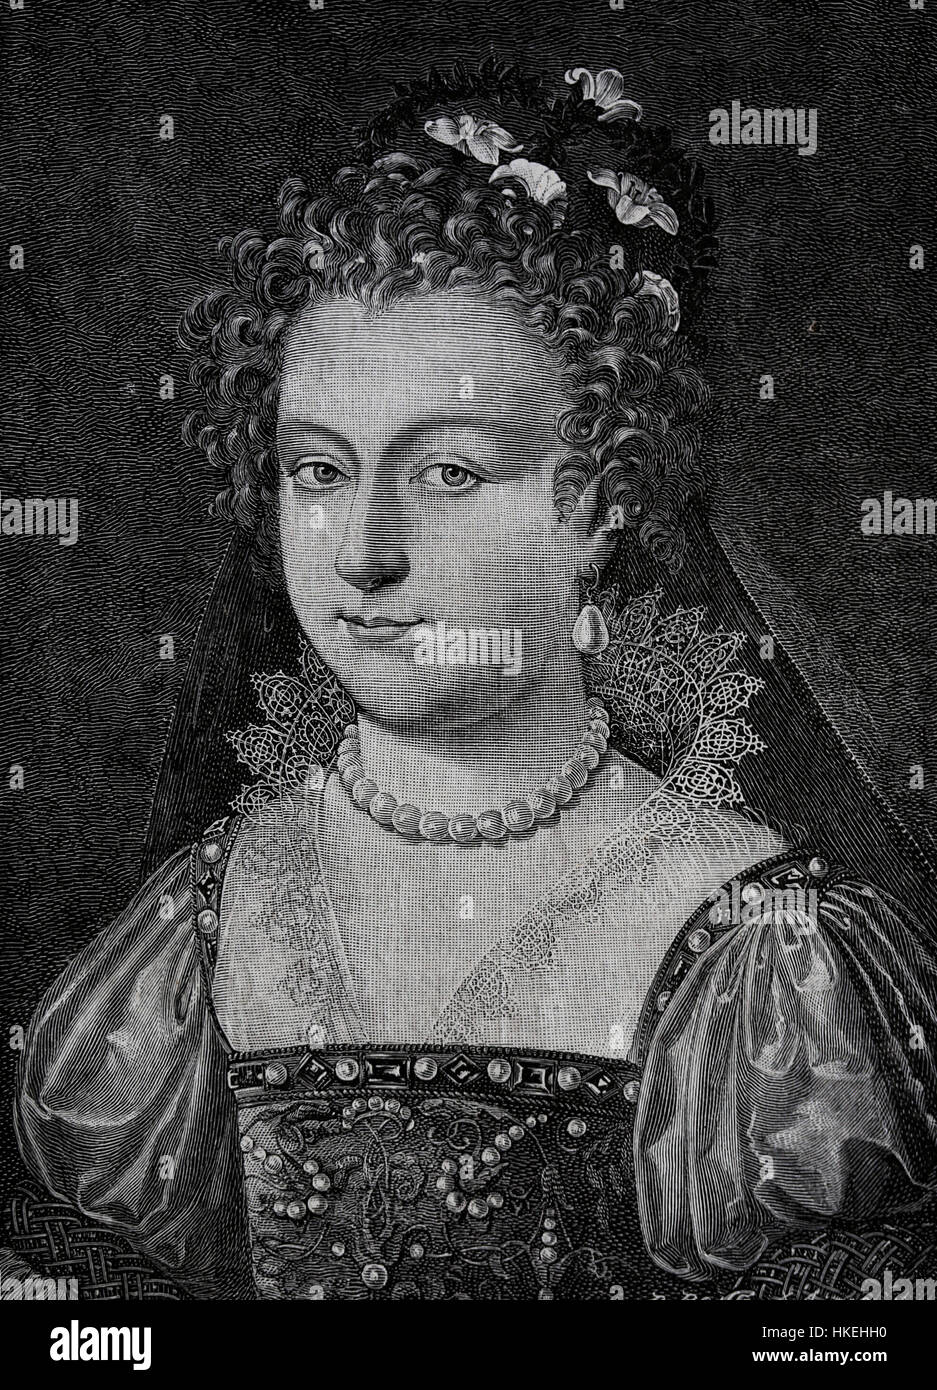 Elizabeth I d'Angleterre () Maalouf. Reine d'Angleterre et l'Irlande. Dynastie des Tudors. Gravure, 19ème siècle. Banque D'Images